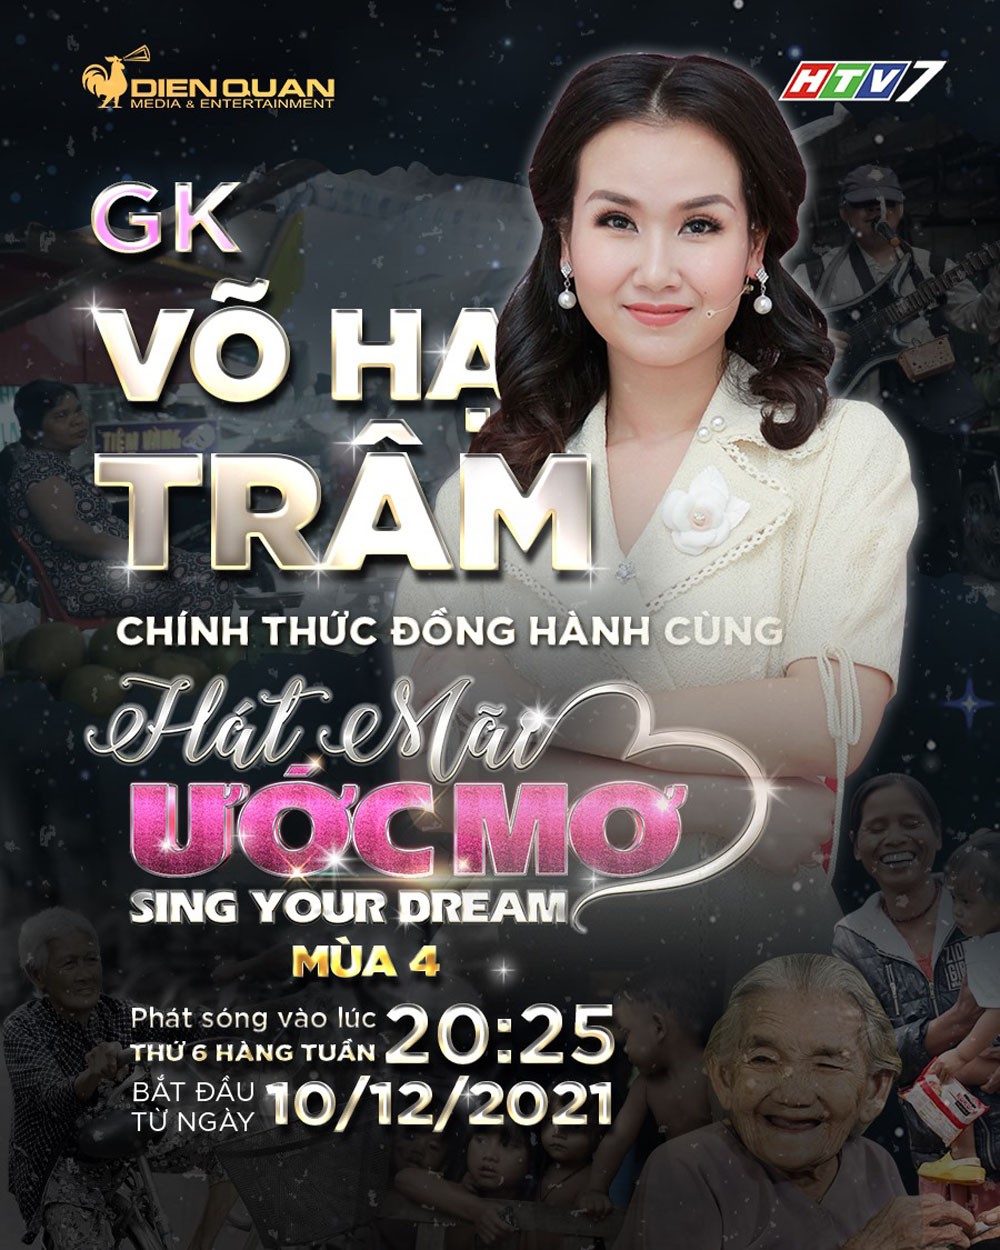 giam-khao-vo-ha-tram-1-1636773944.jpg